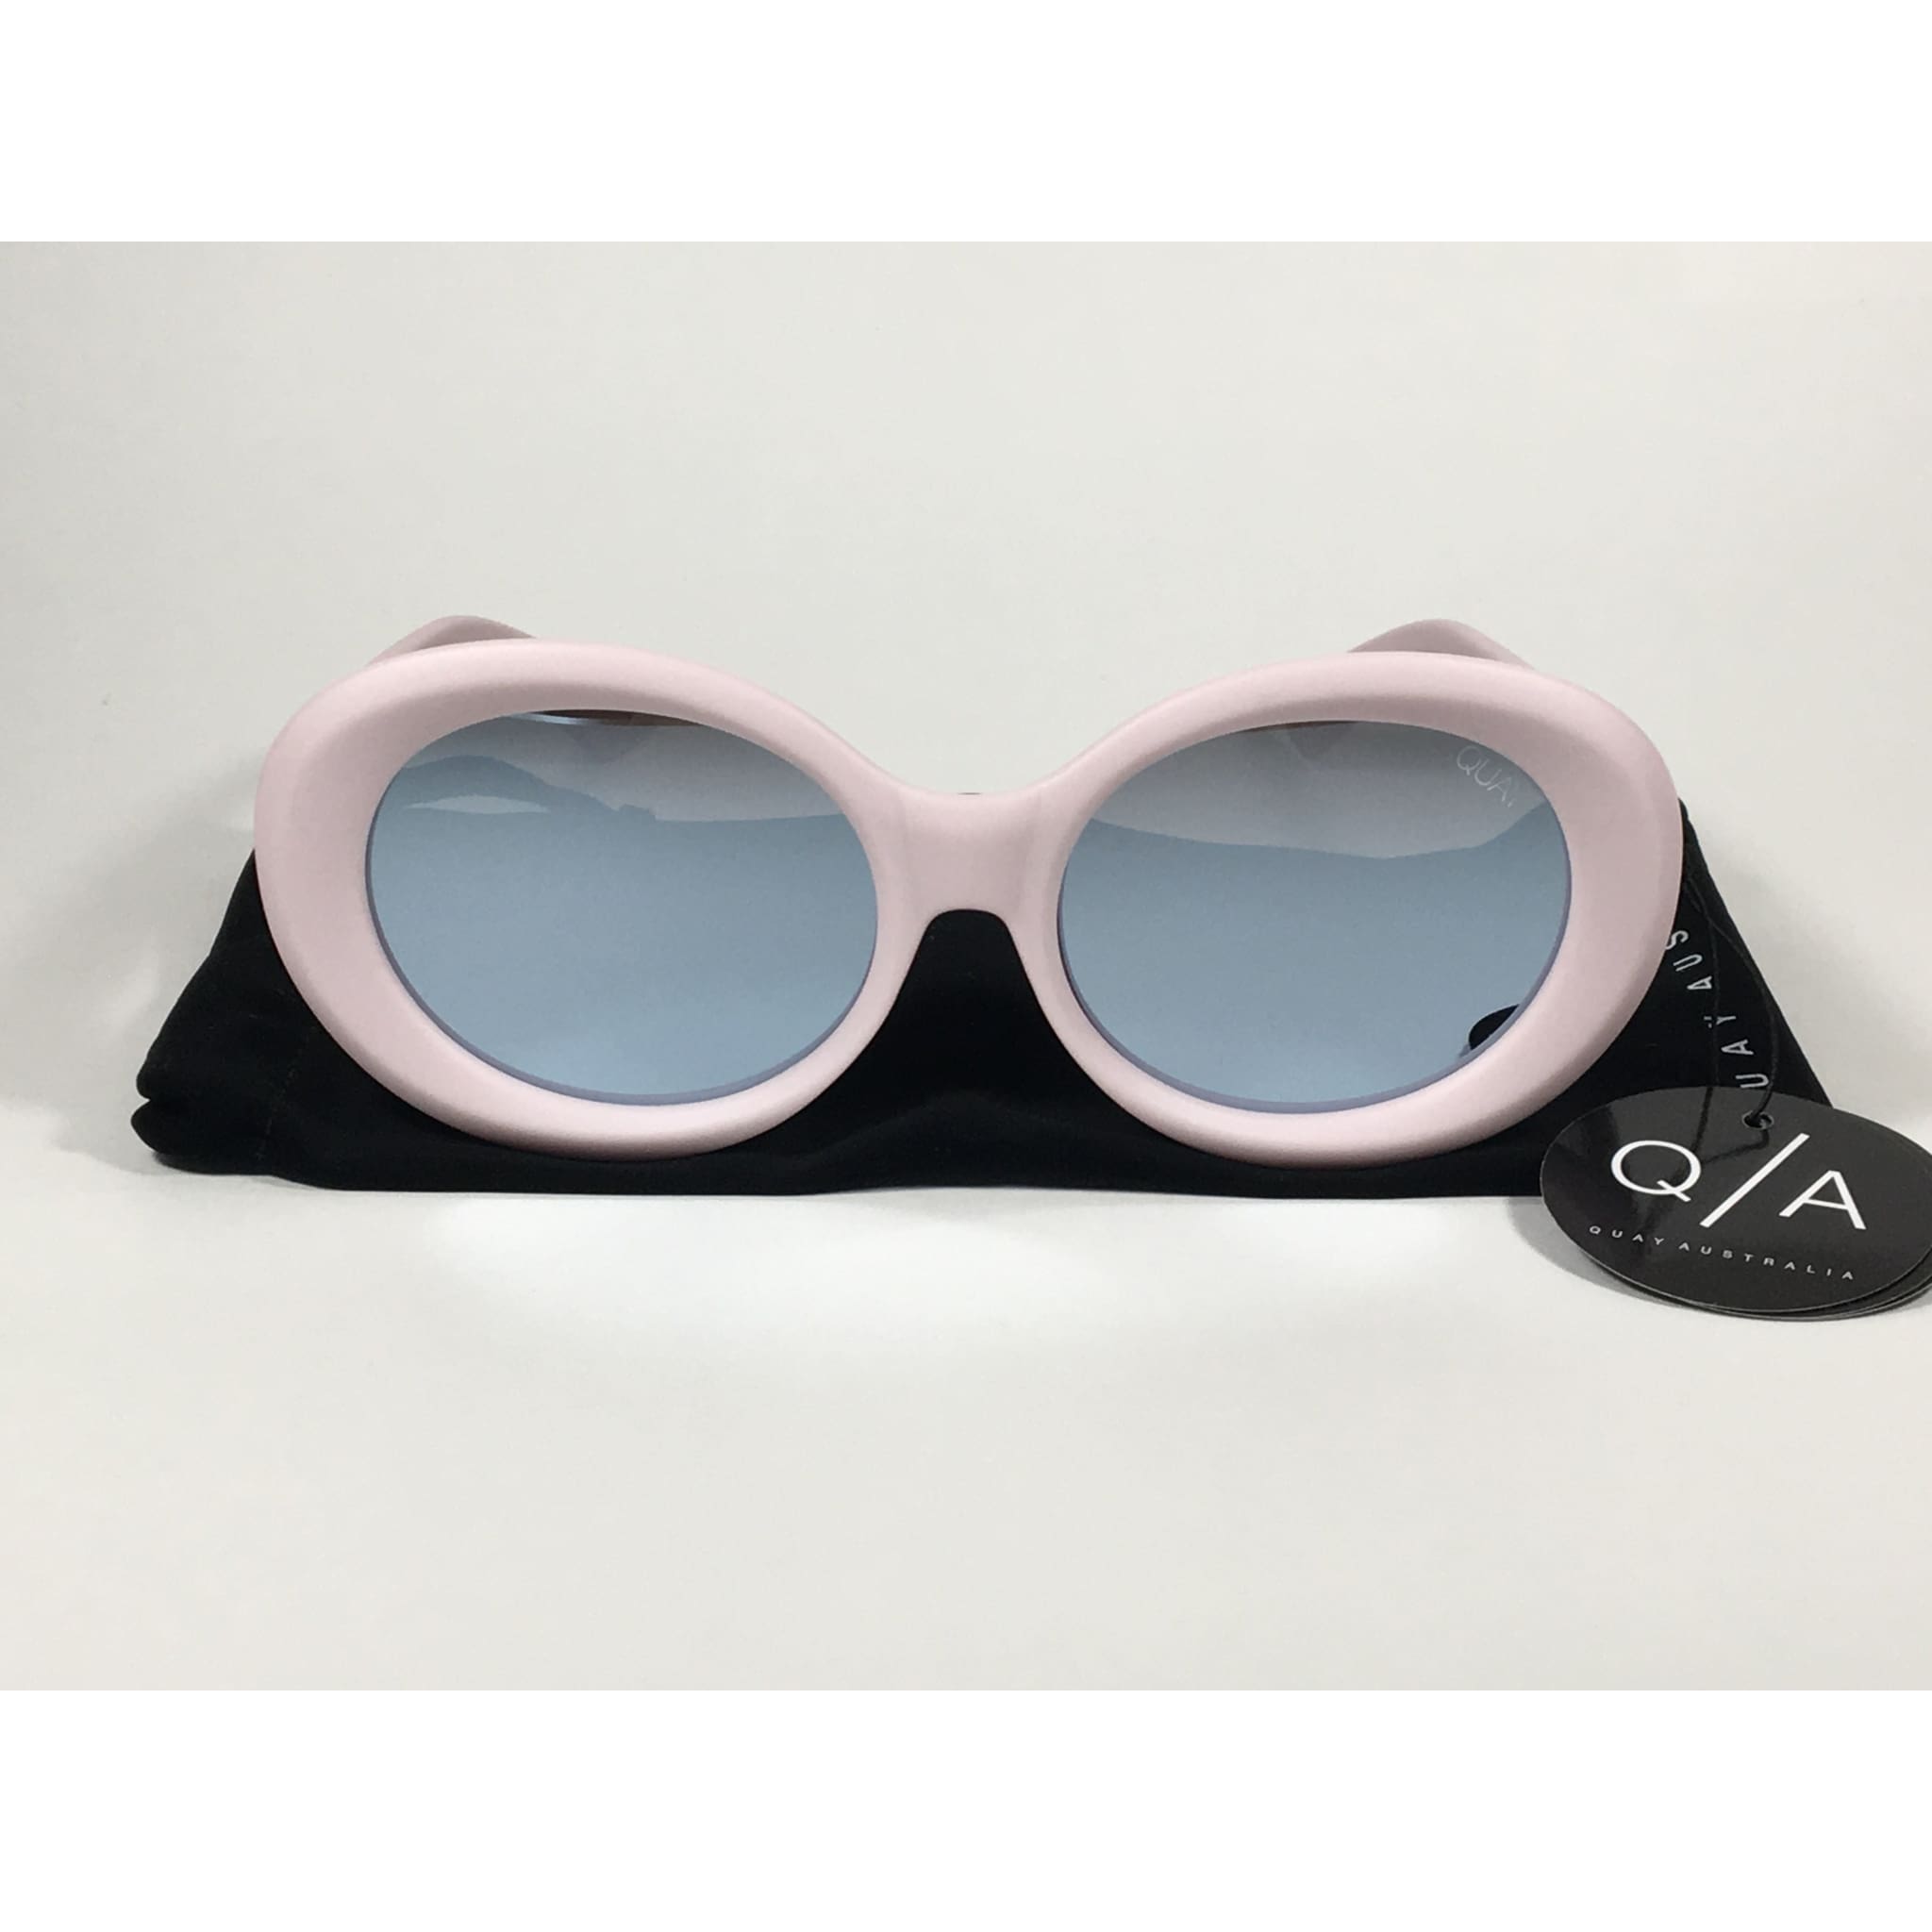 NEW RARE QUAY Australia HIGH KEY Rose Copper Fade Mirror Sunglasses -  Defective | eBay